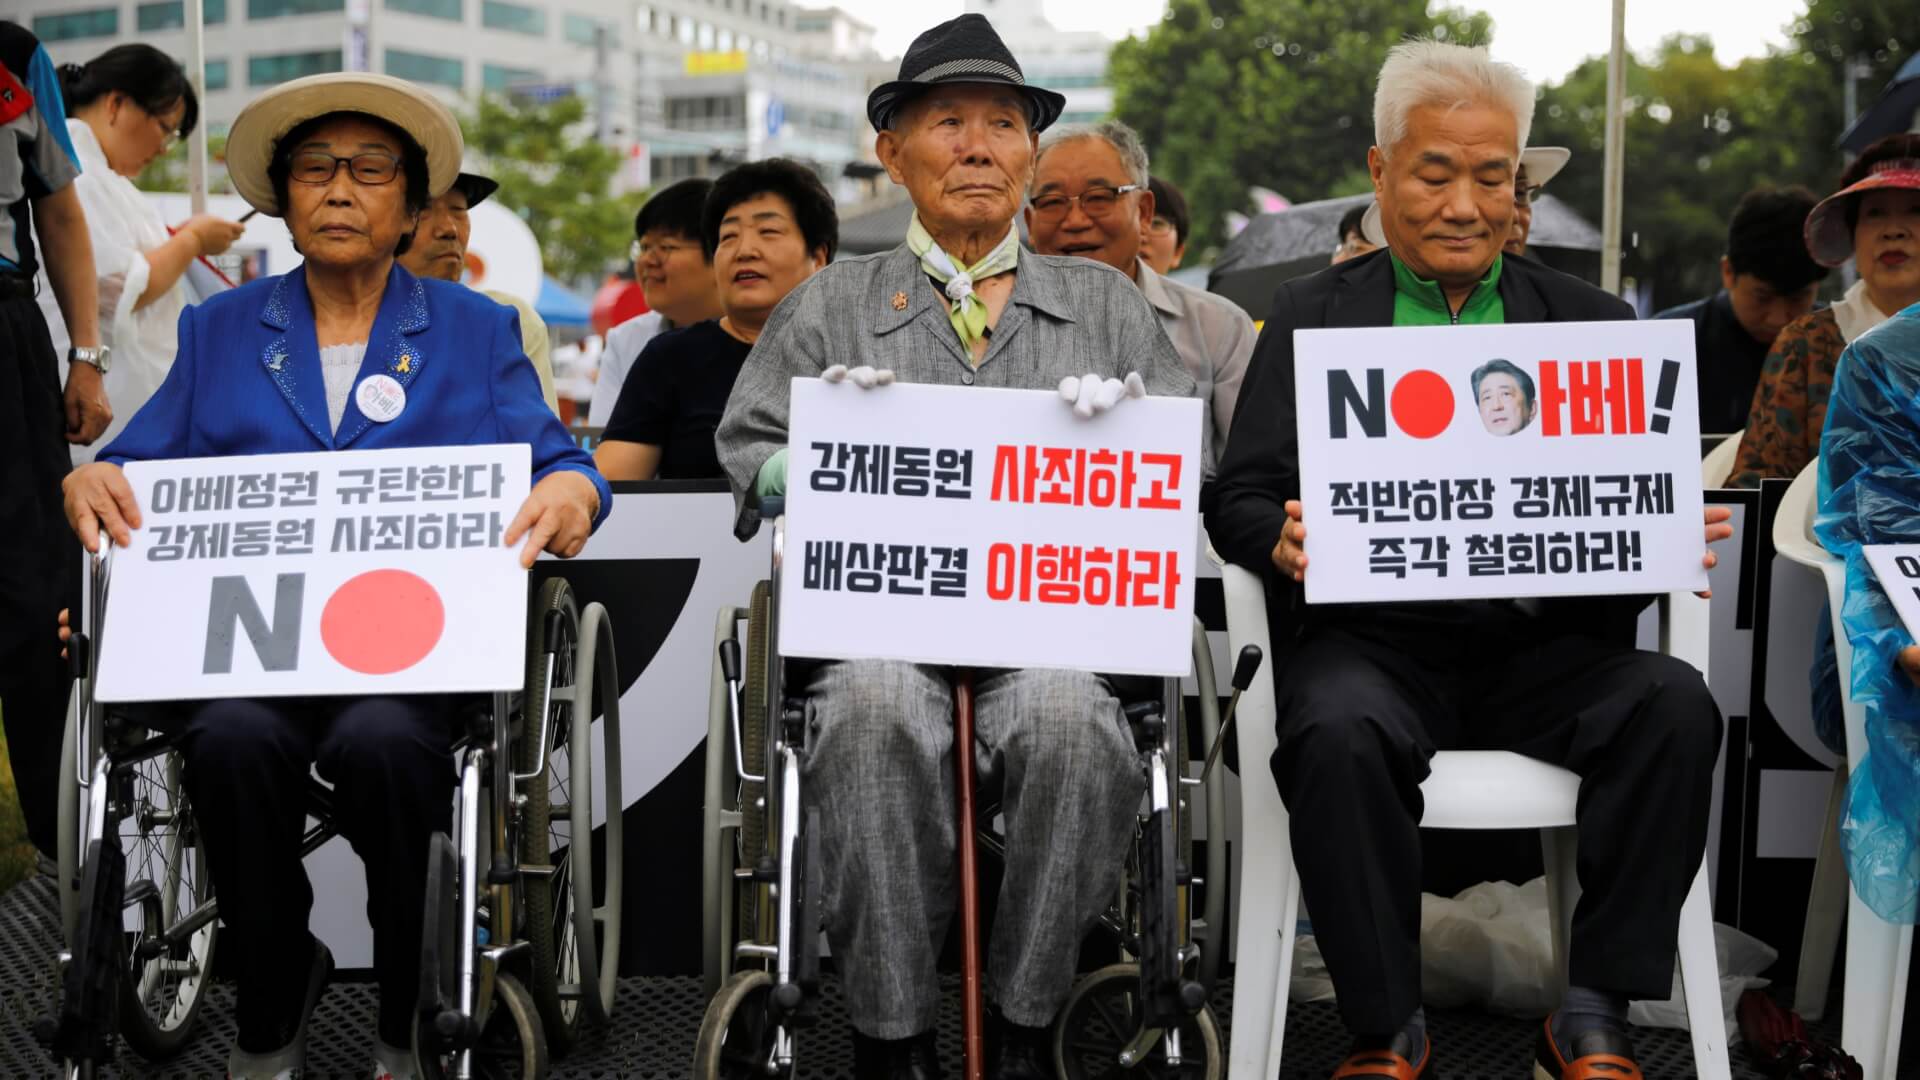 Japan-South Korea Feud Reignites Over World War II Compensation